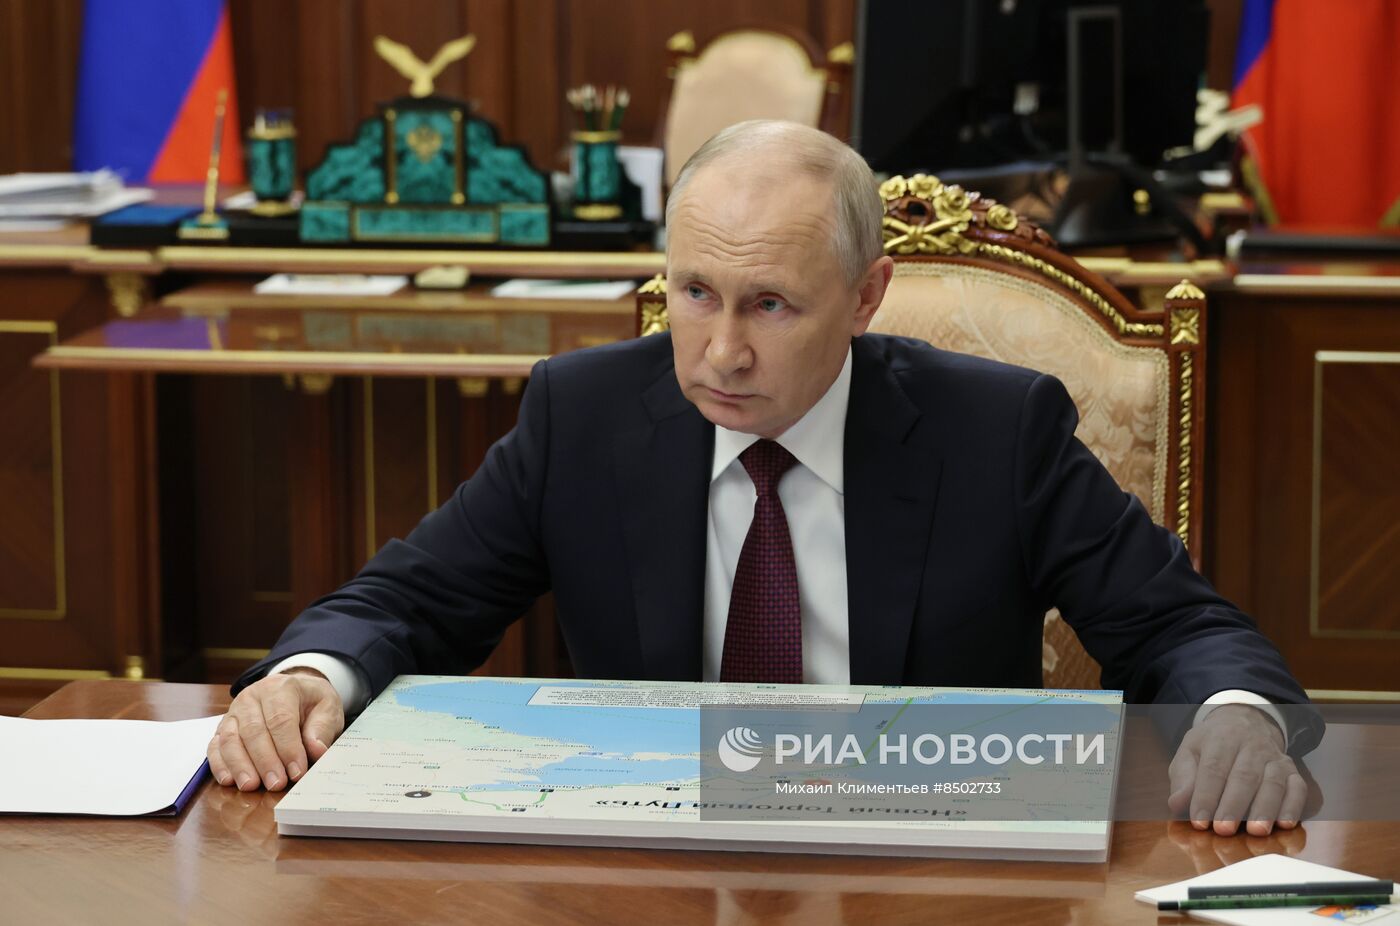 Встреча президента РФ В. Путина и врио губернатора Херсонской области В. Сальдо